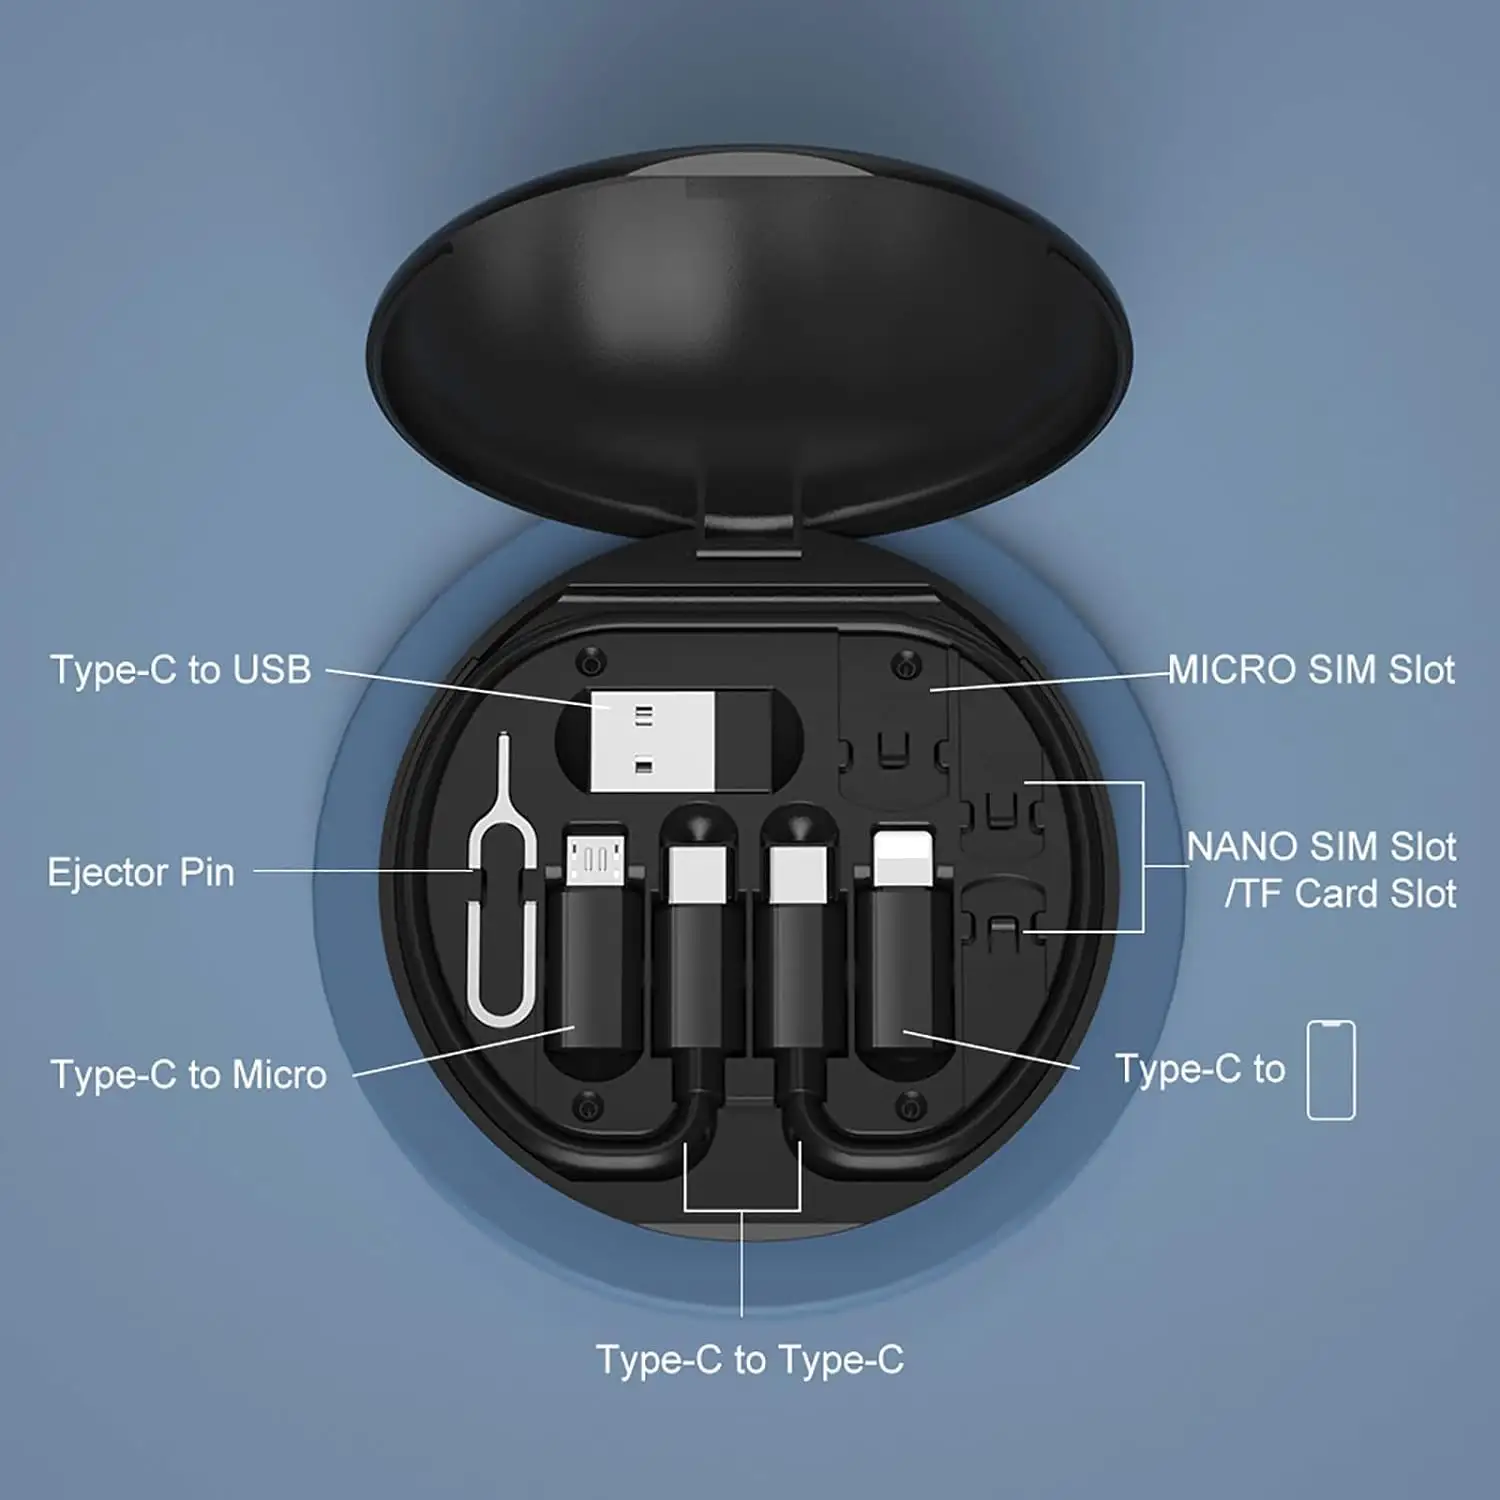 Caja de almacenamiento de cable de carga múltiple Incluye Soporte para tarjeta SIM Adaptador USB Cable de carga Micro USB con USB C iOS